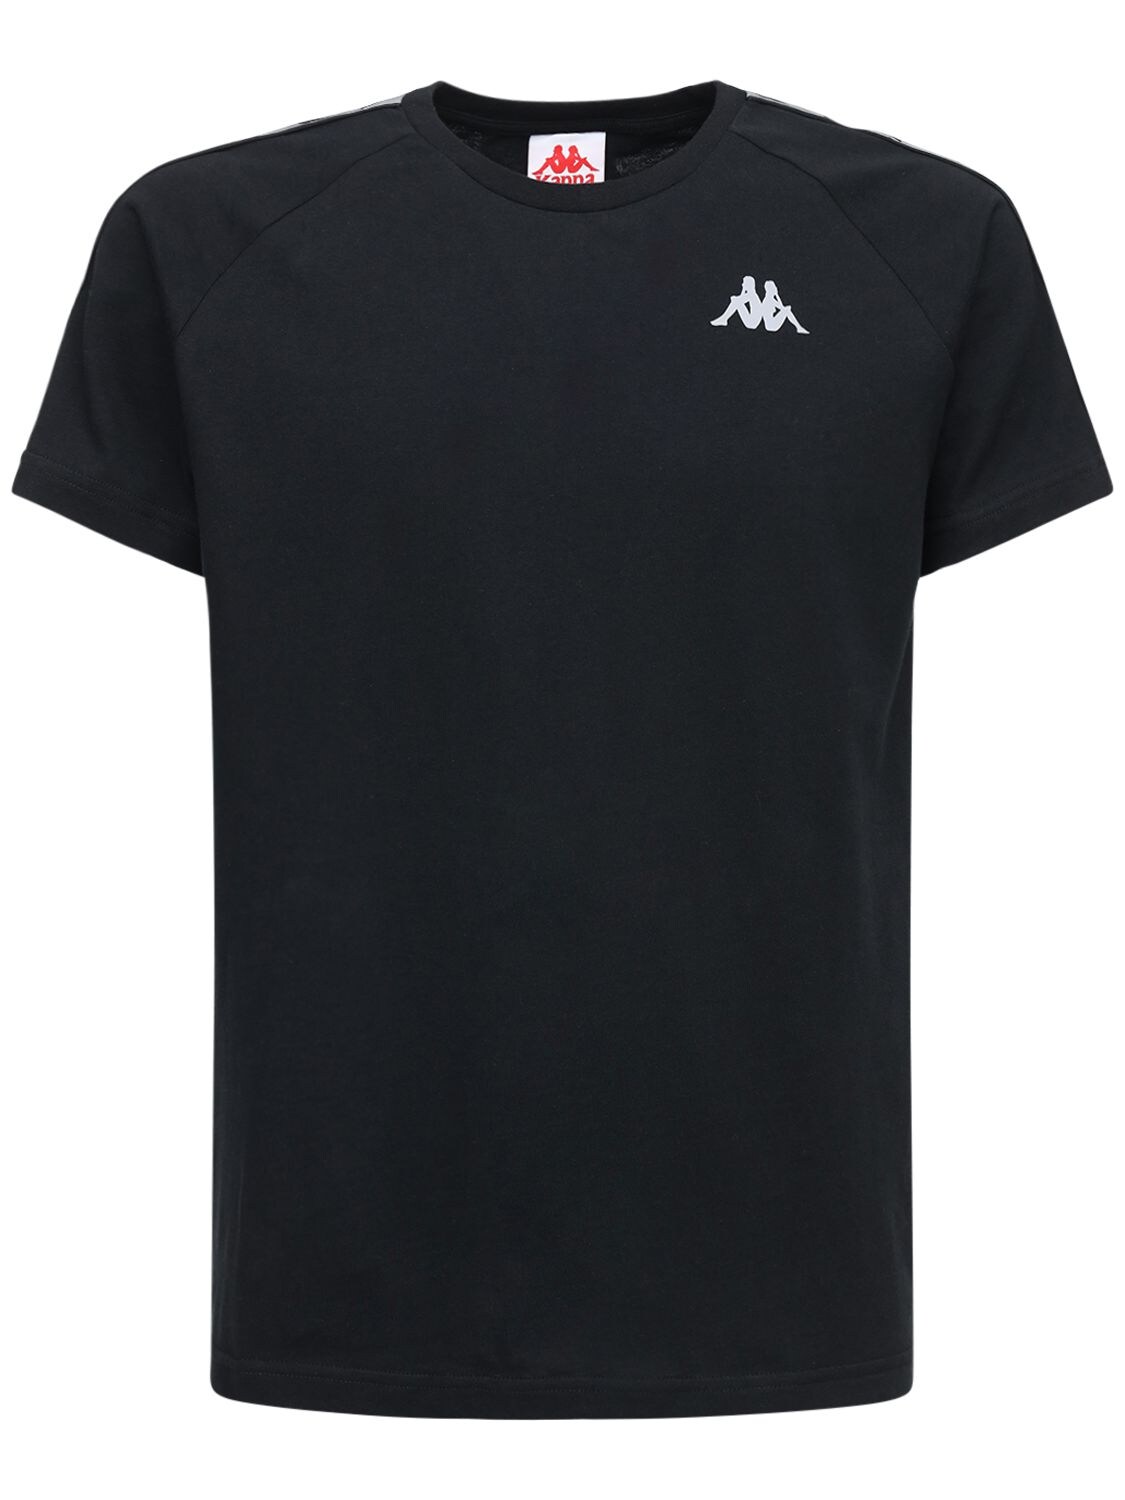 Kappa Reflective Print Cotton T-shirt In Black